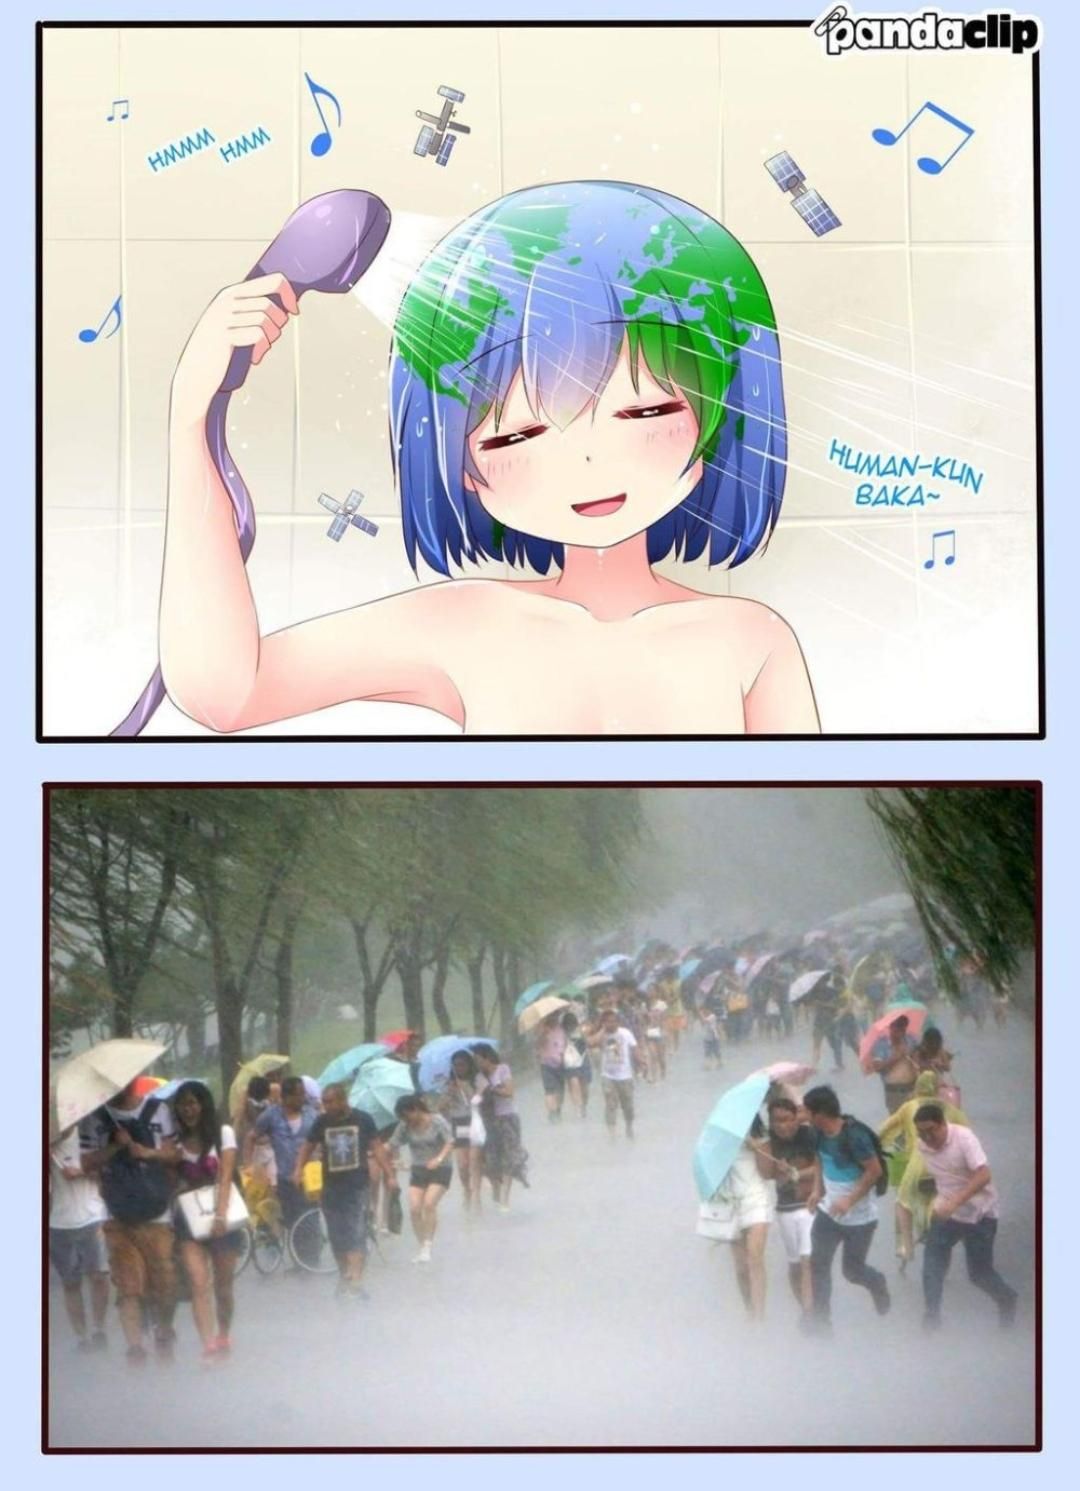 earth-chan is wet...